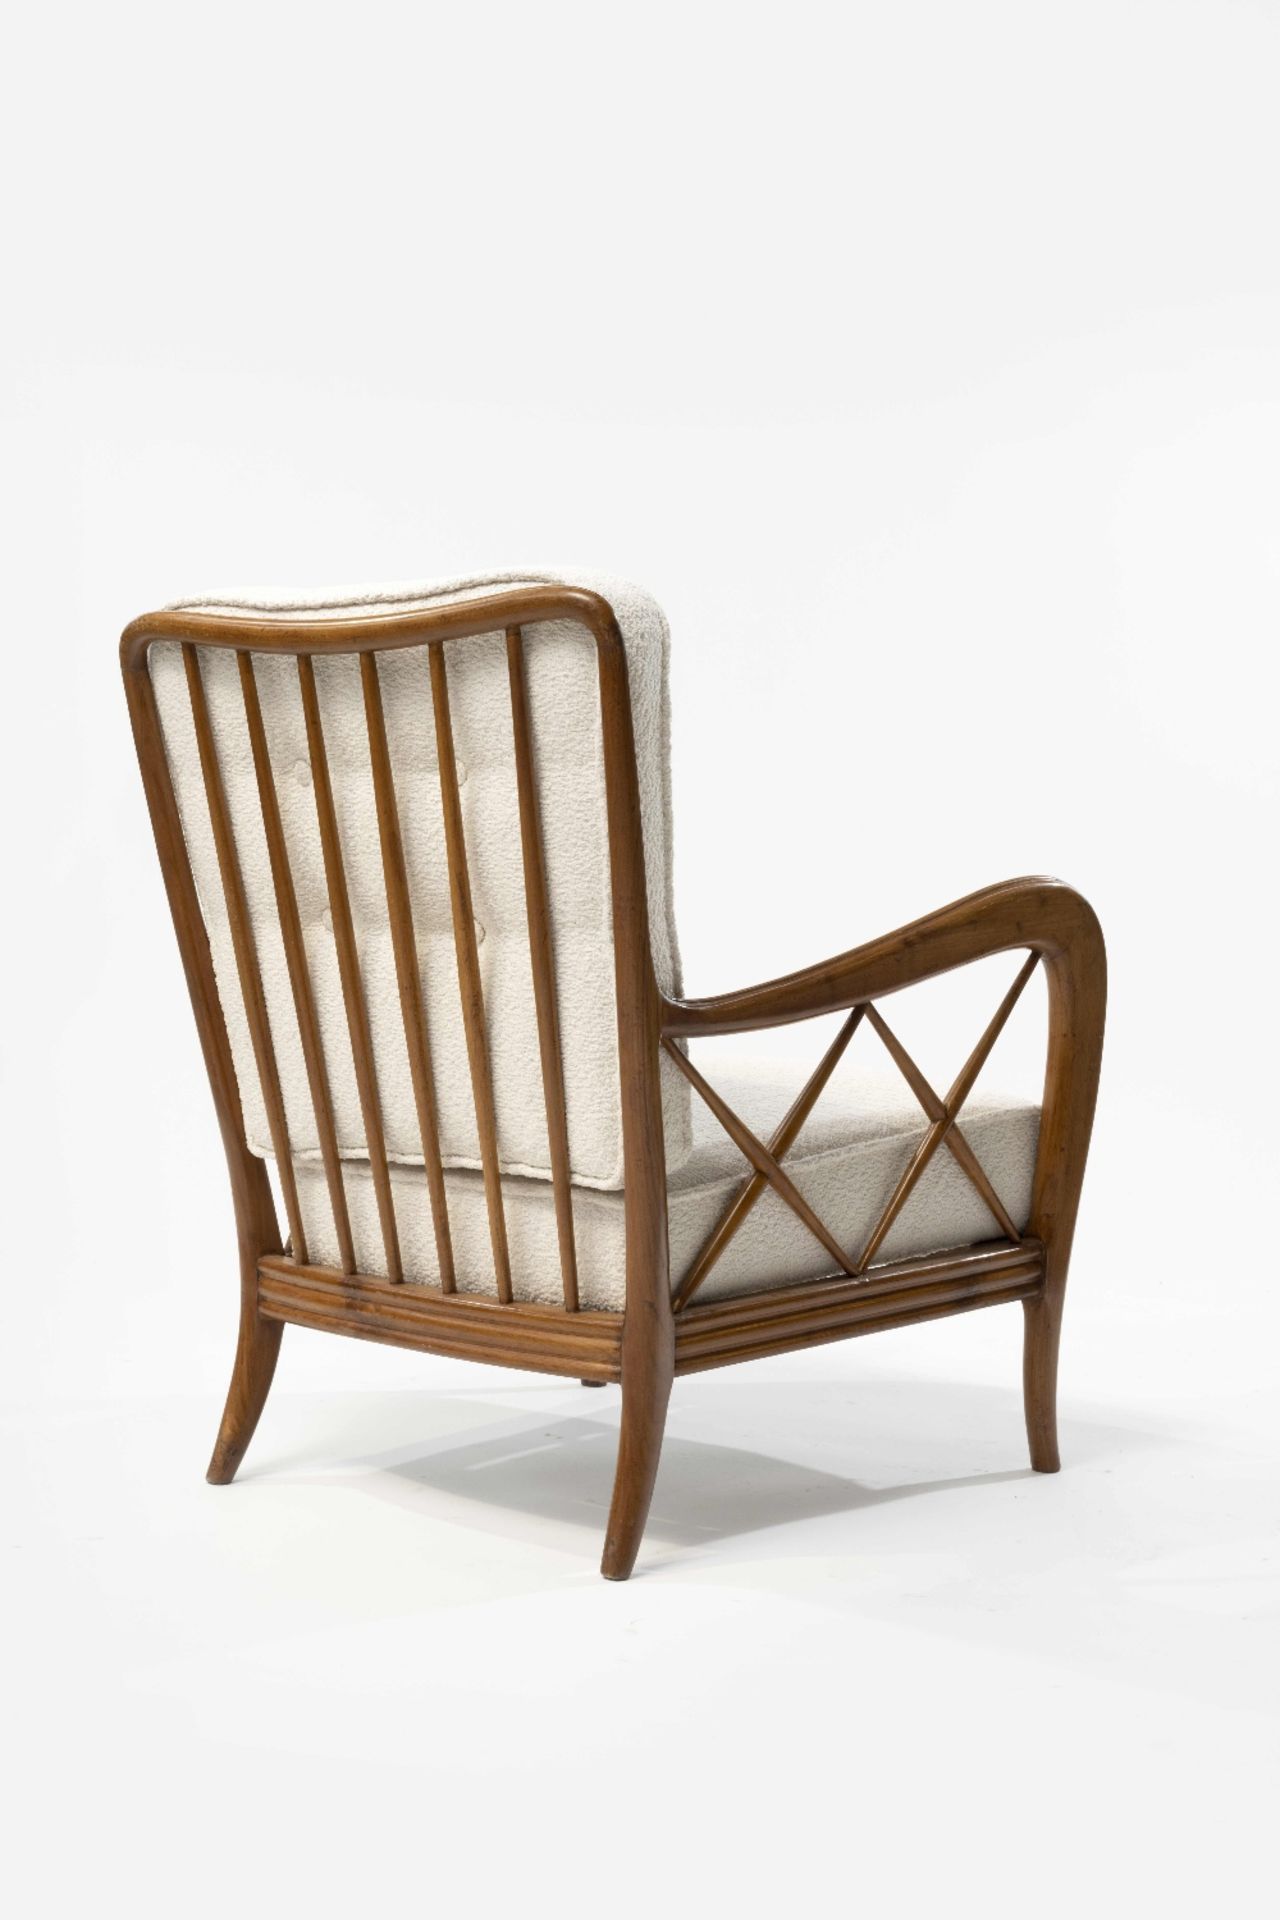 PAOLO BUFFA (attribu&#233; &#224;) Paire de fauteuils &#171;croisillons&#187;cr&#233;ation circa ... - Image 4 of 4